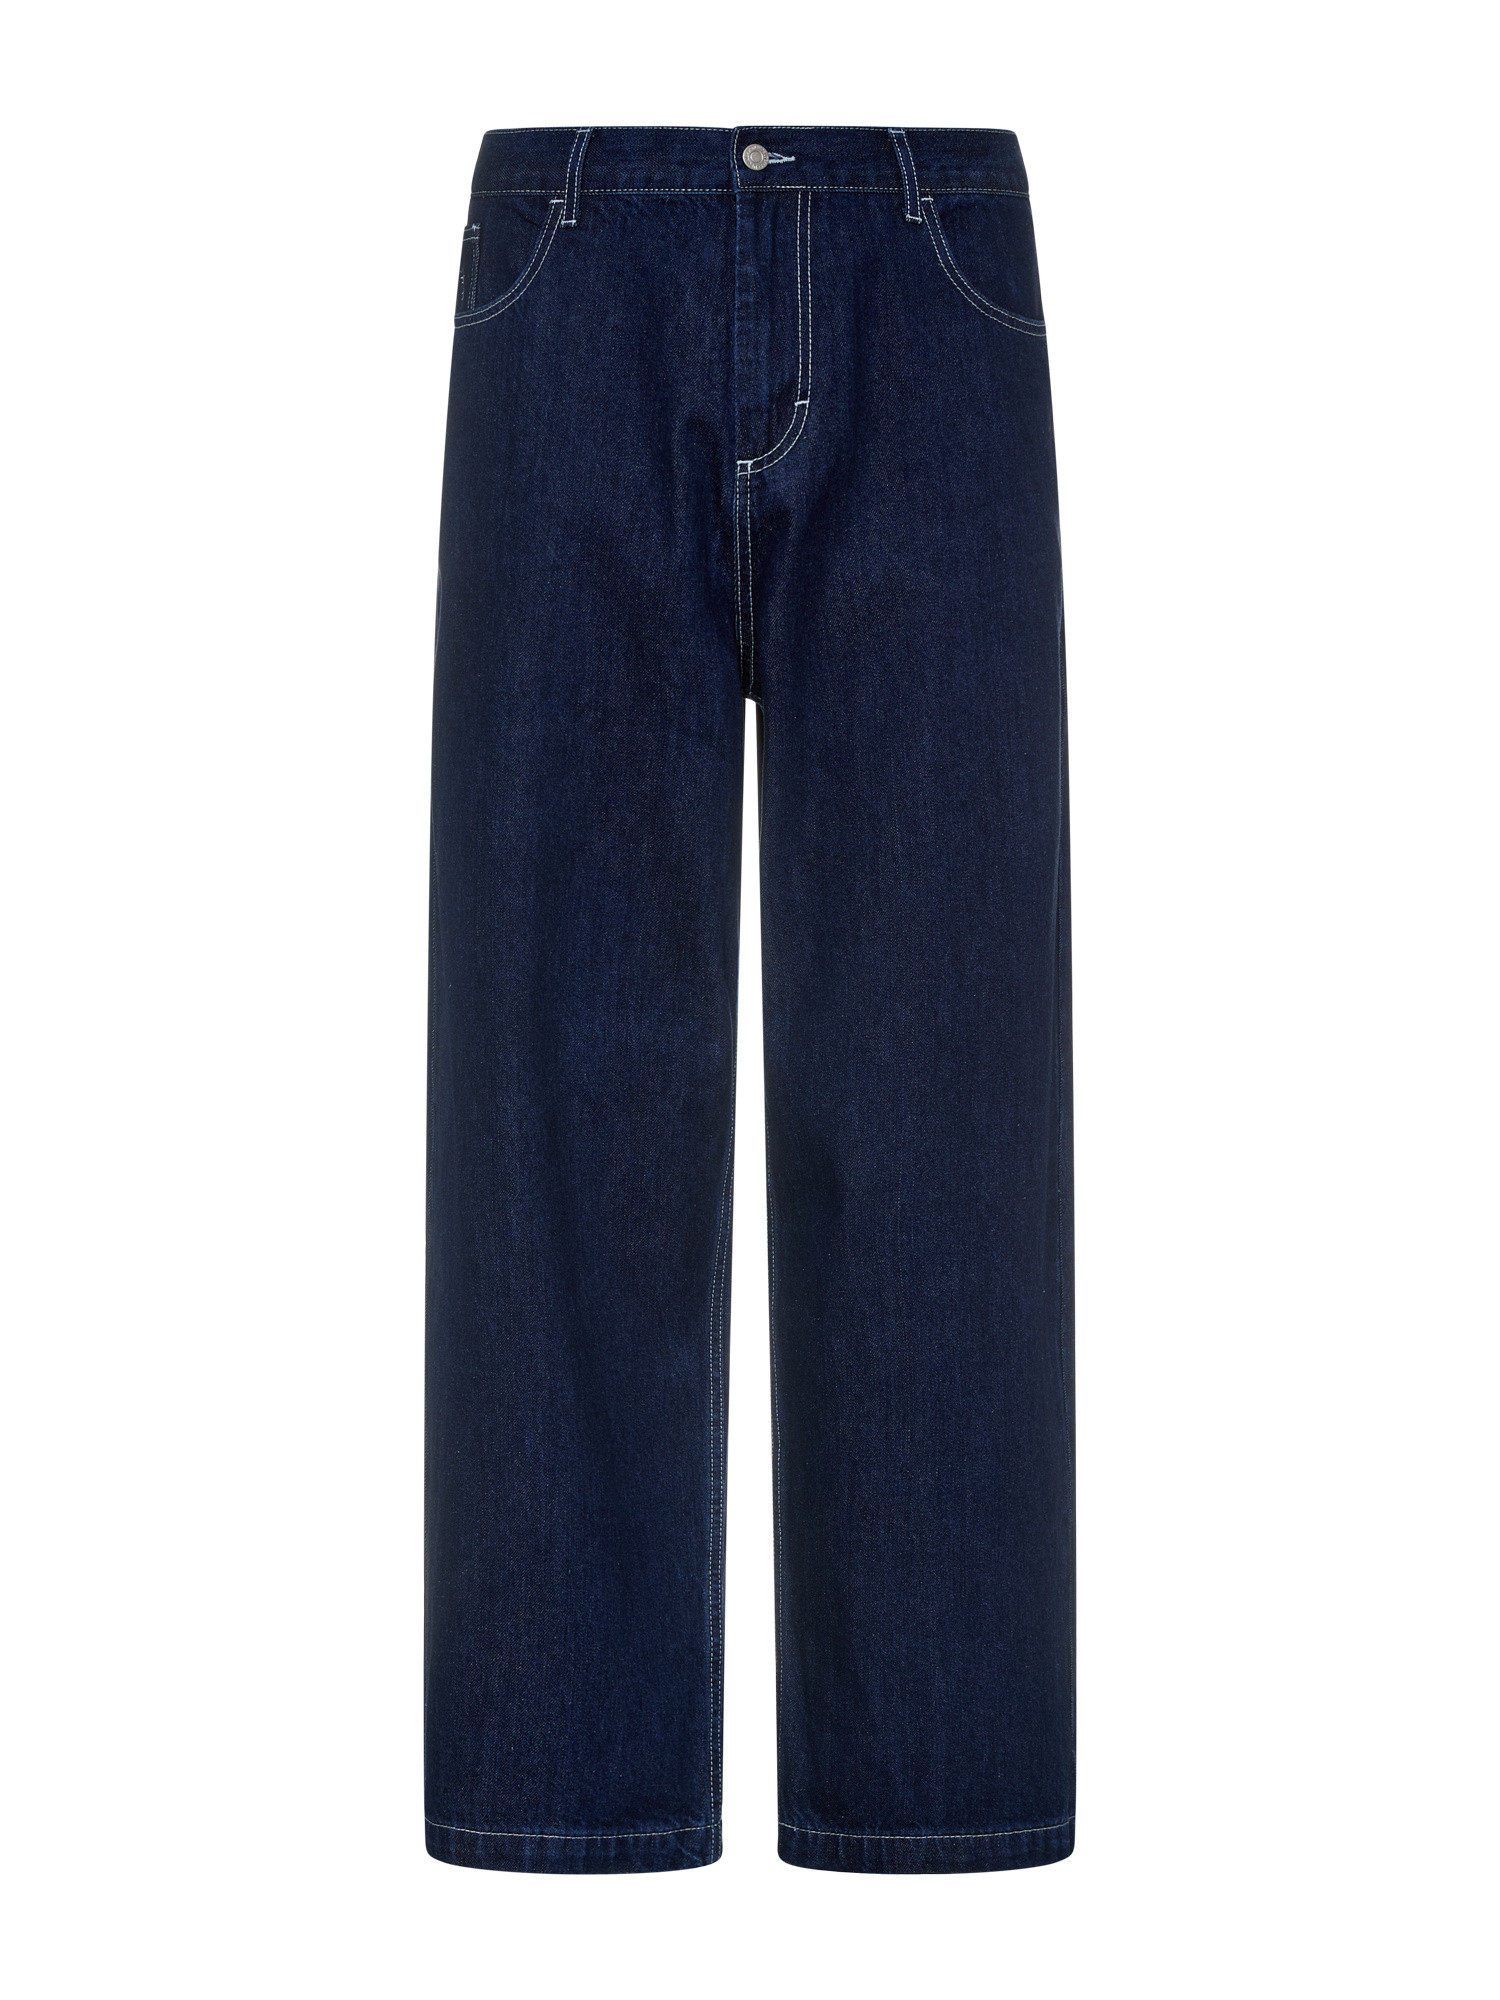 Usual - Giga Denim Pants, Dark Blue, large image number 0